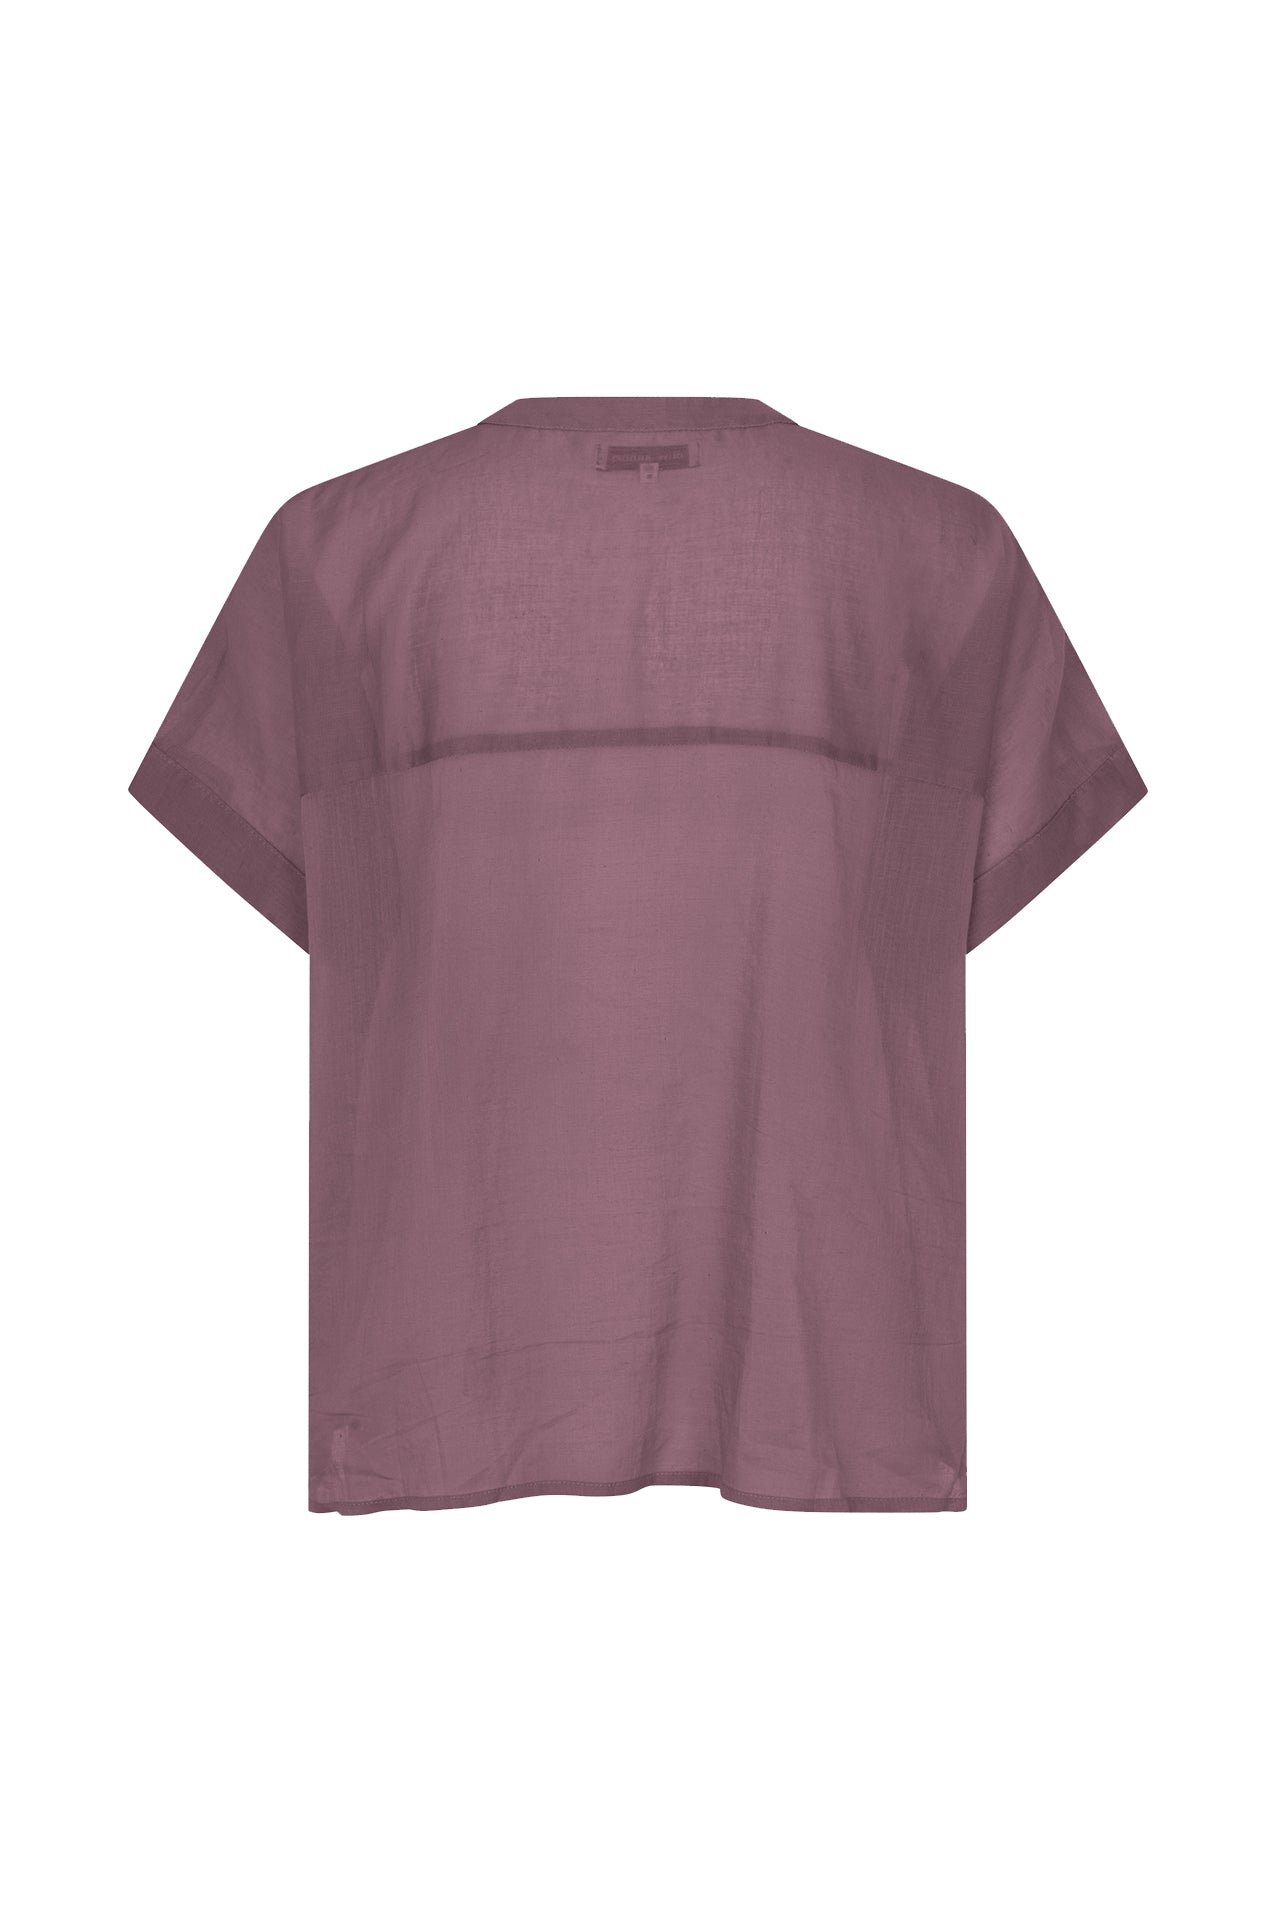 Lollys Laundry MyaLL Shirt SS Shirt 34 Mauve